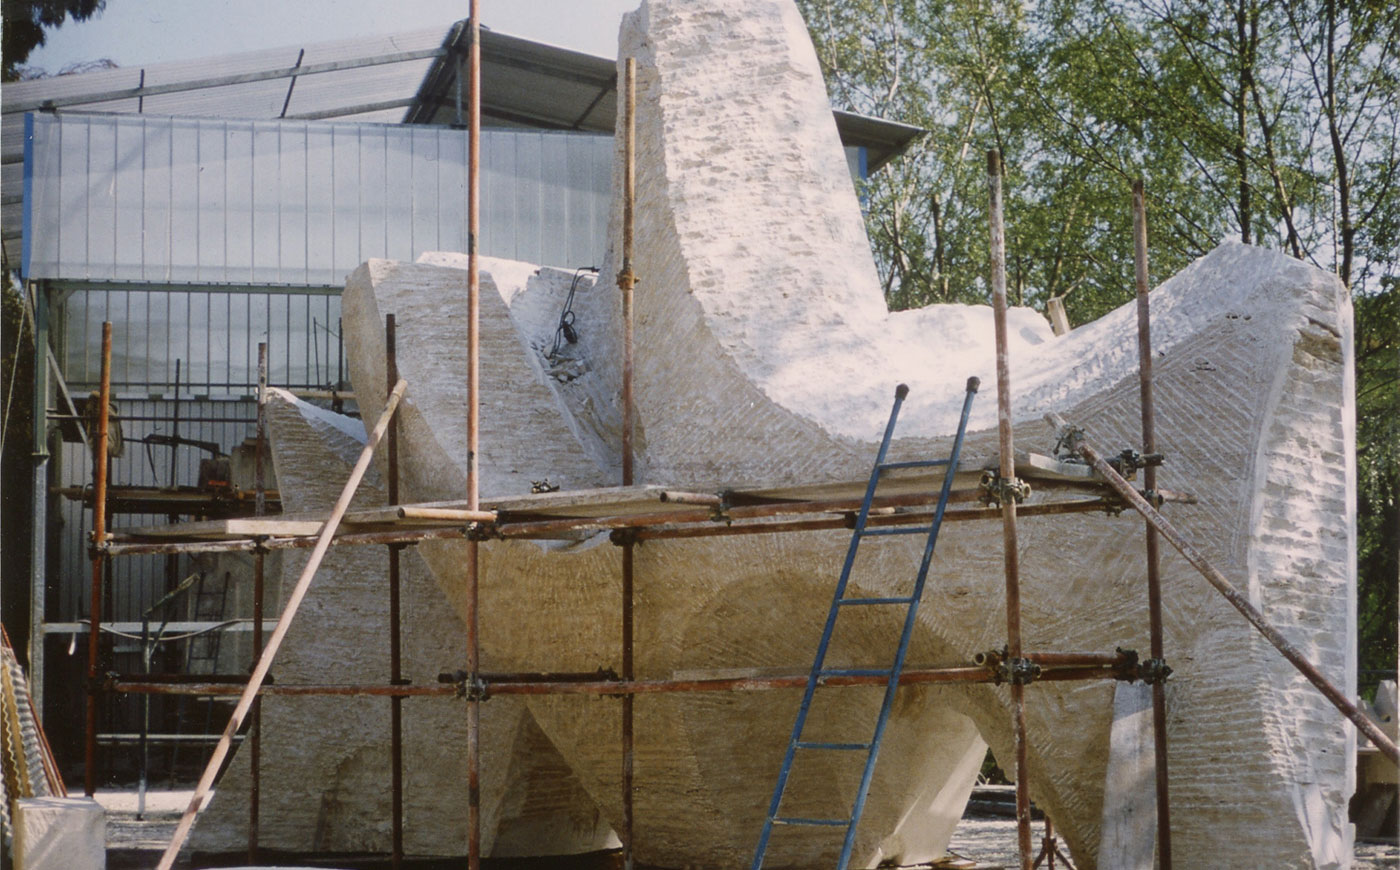 Richard Erdman modern sculptor large installation